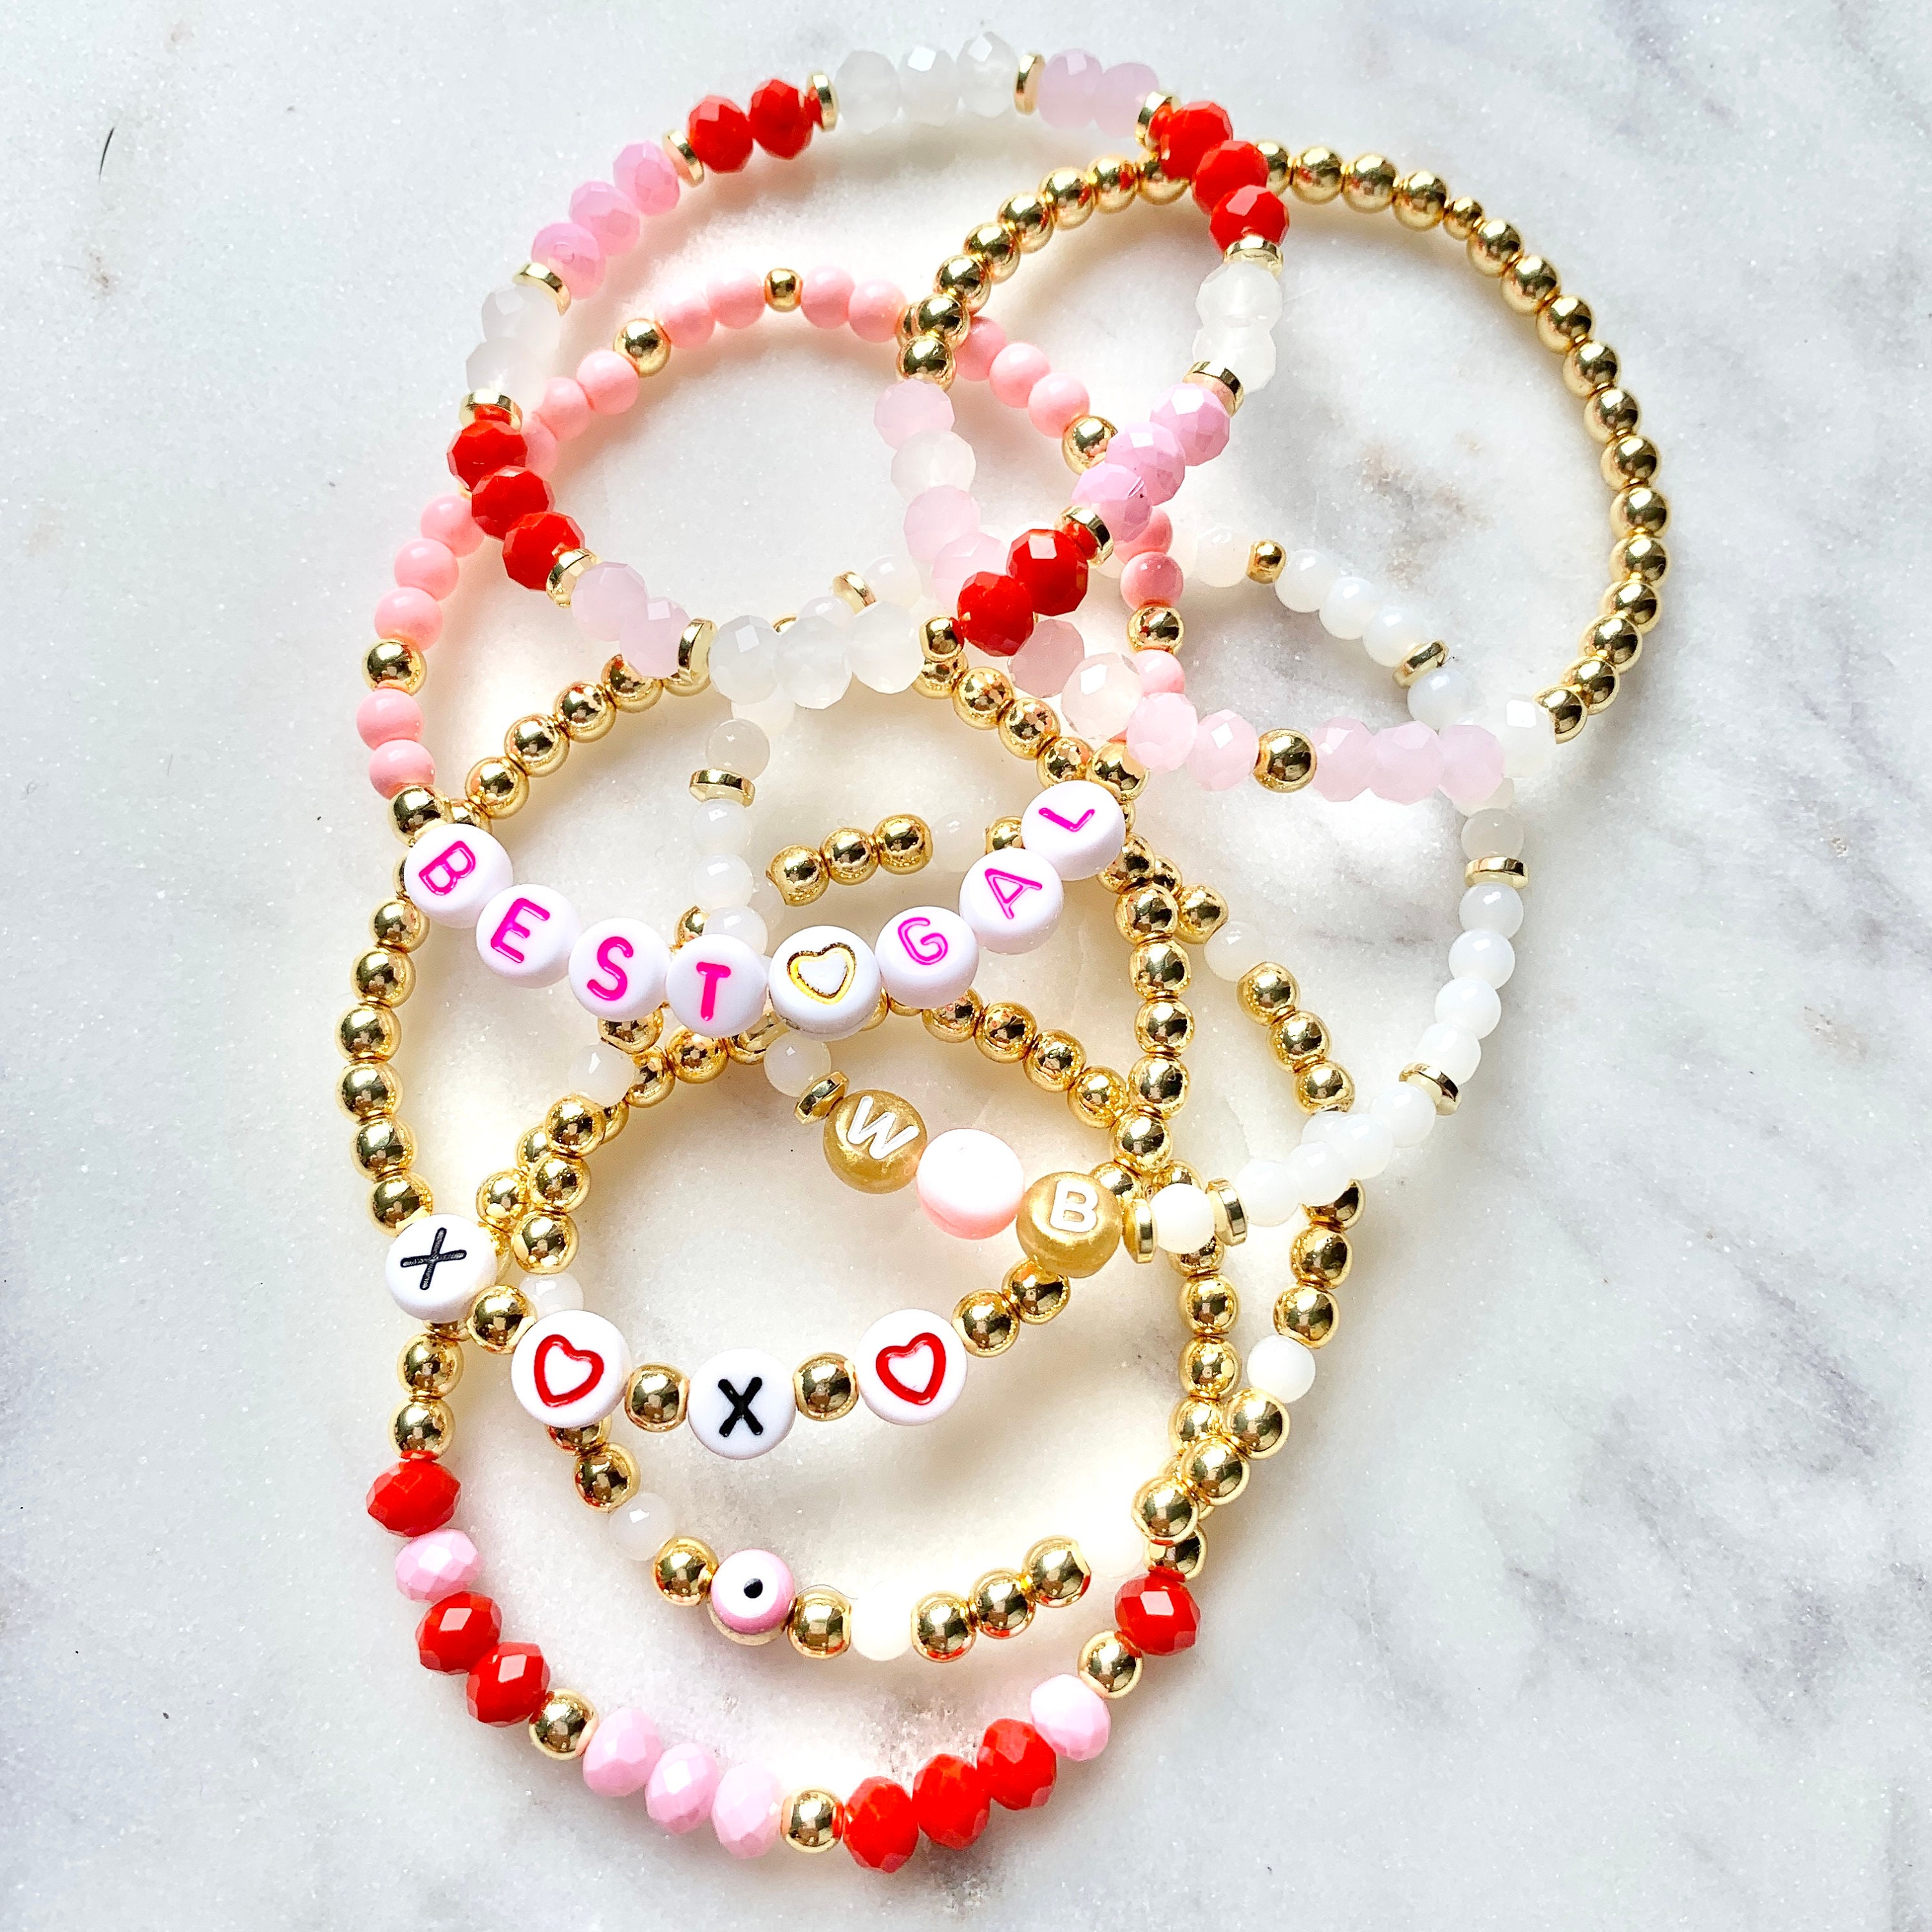 Valentine Bead Bracelet | Valentines Bracelet | Love Bracelet | XOXO |  Beaded Bracelet | Stretch Bracelet